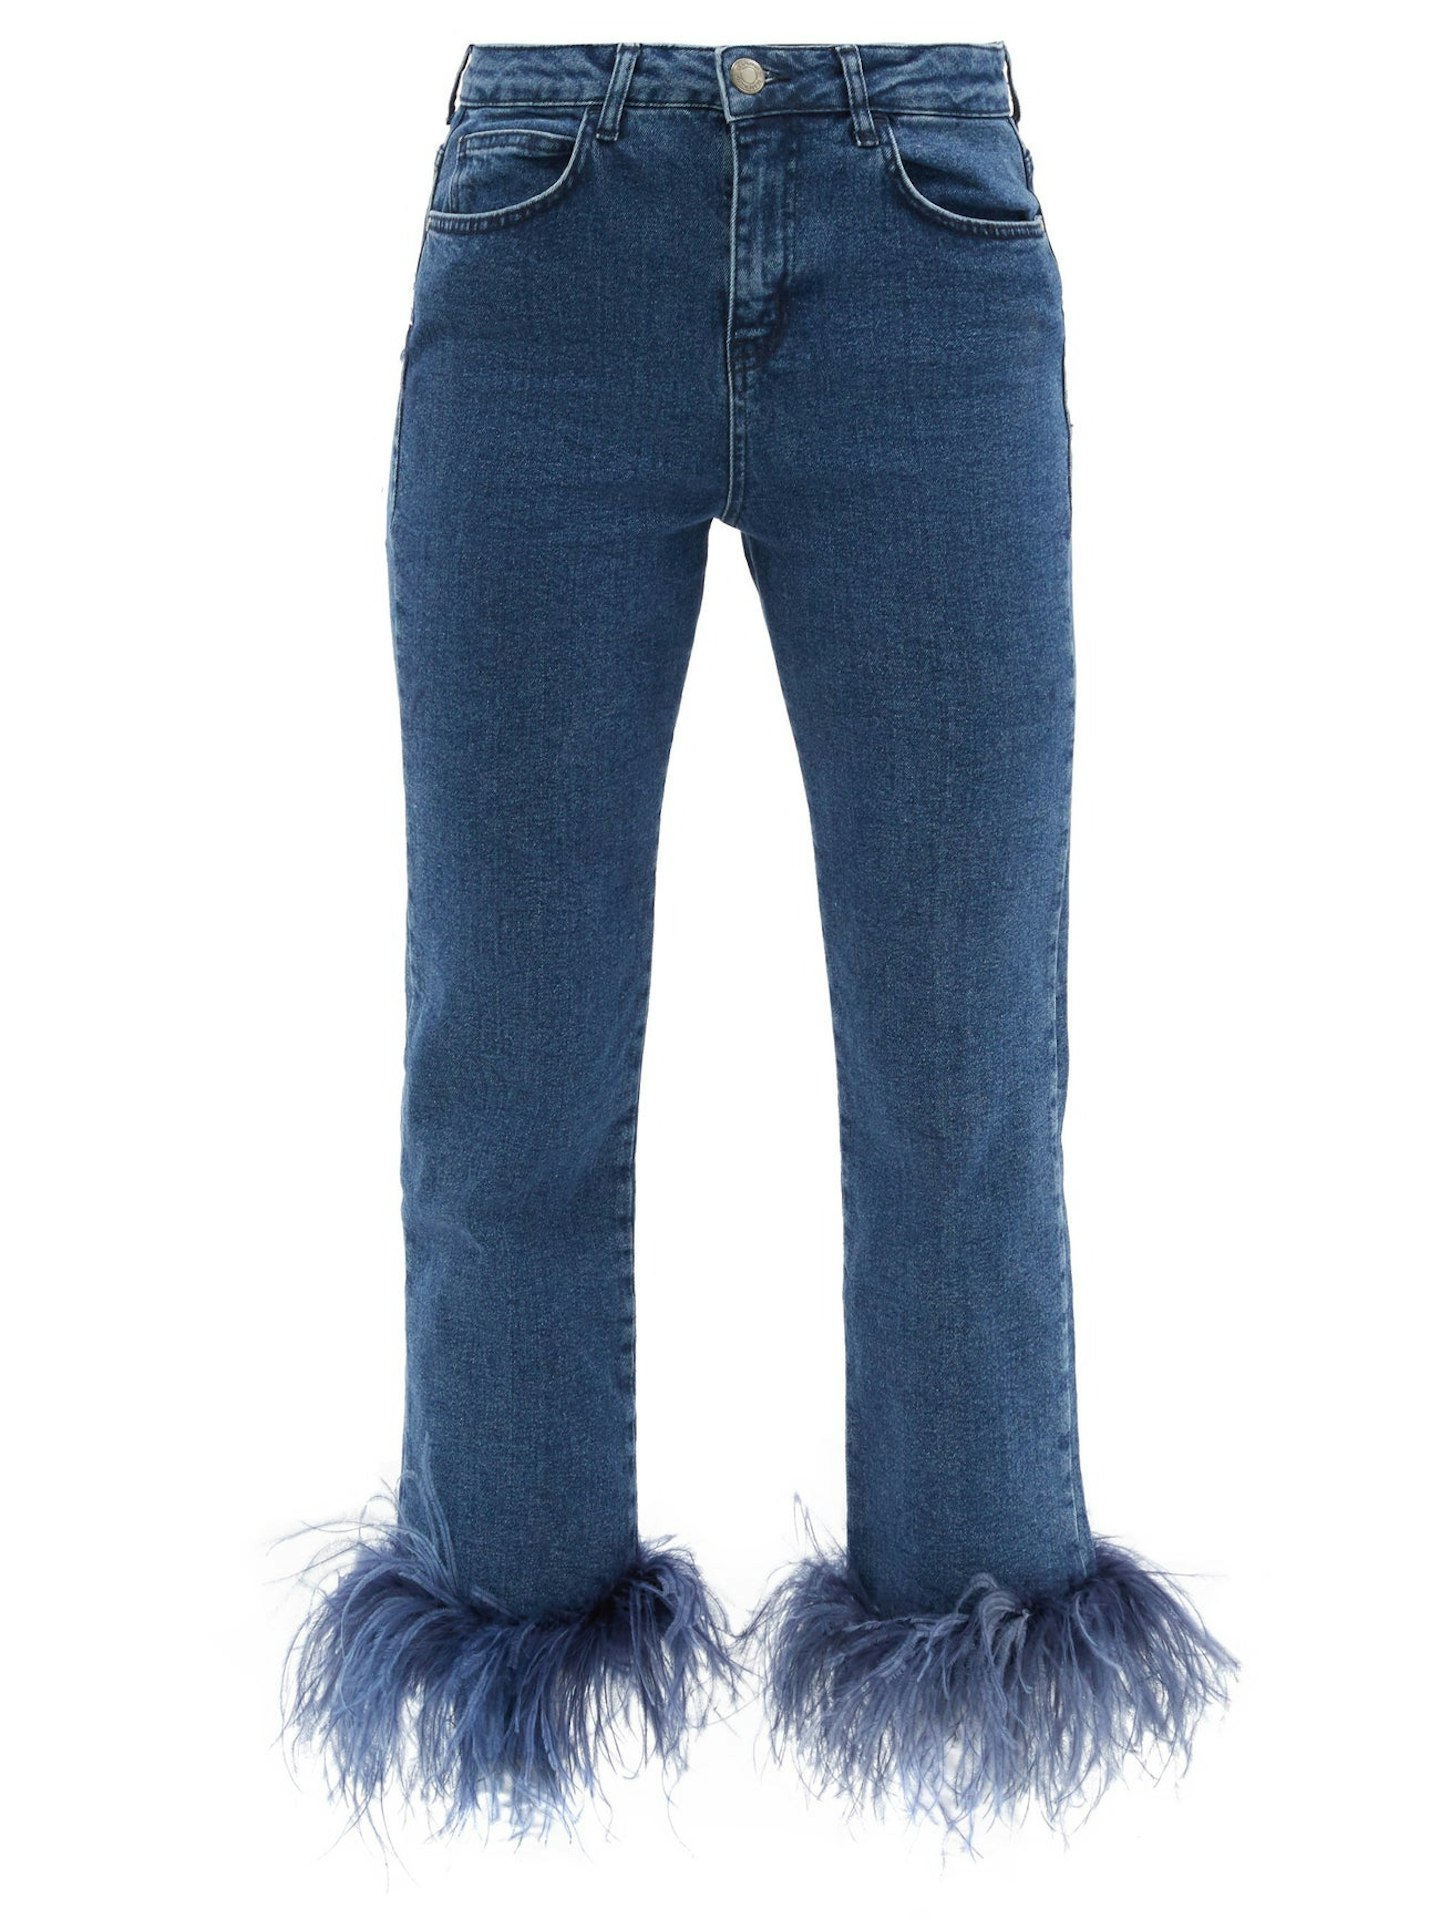 16Arlington, Feather-Trimmed Cropped Denim Jeans, £395